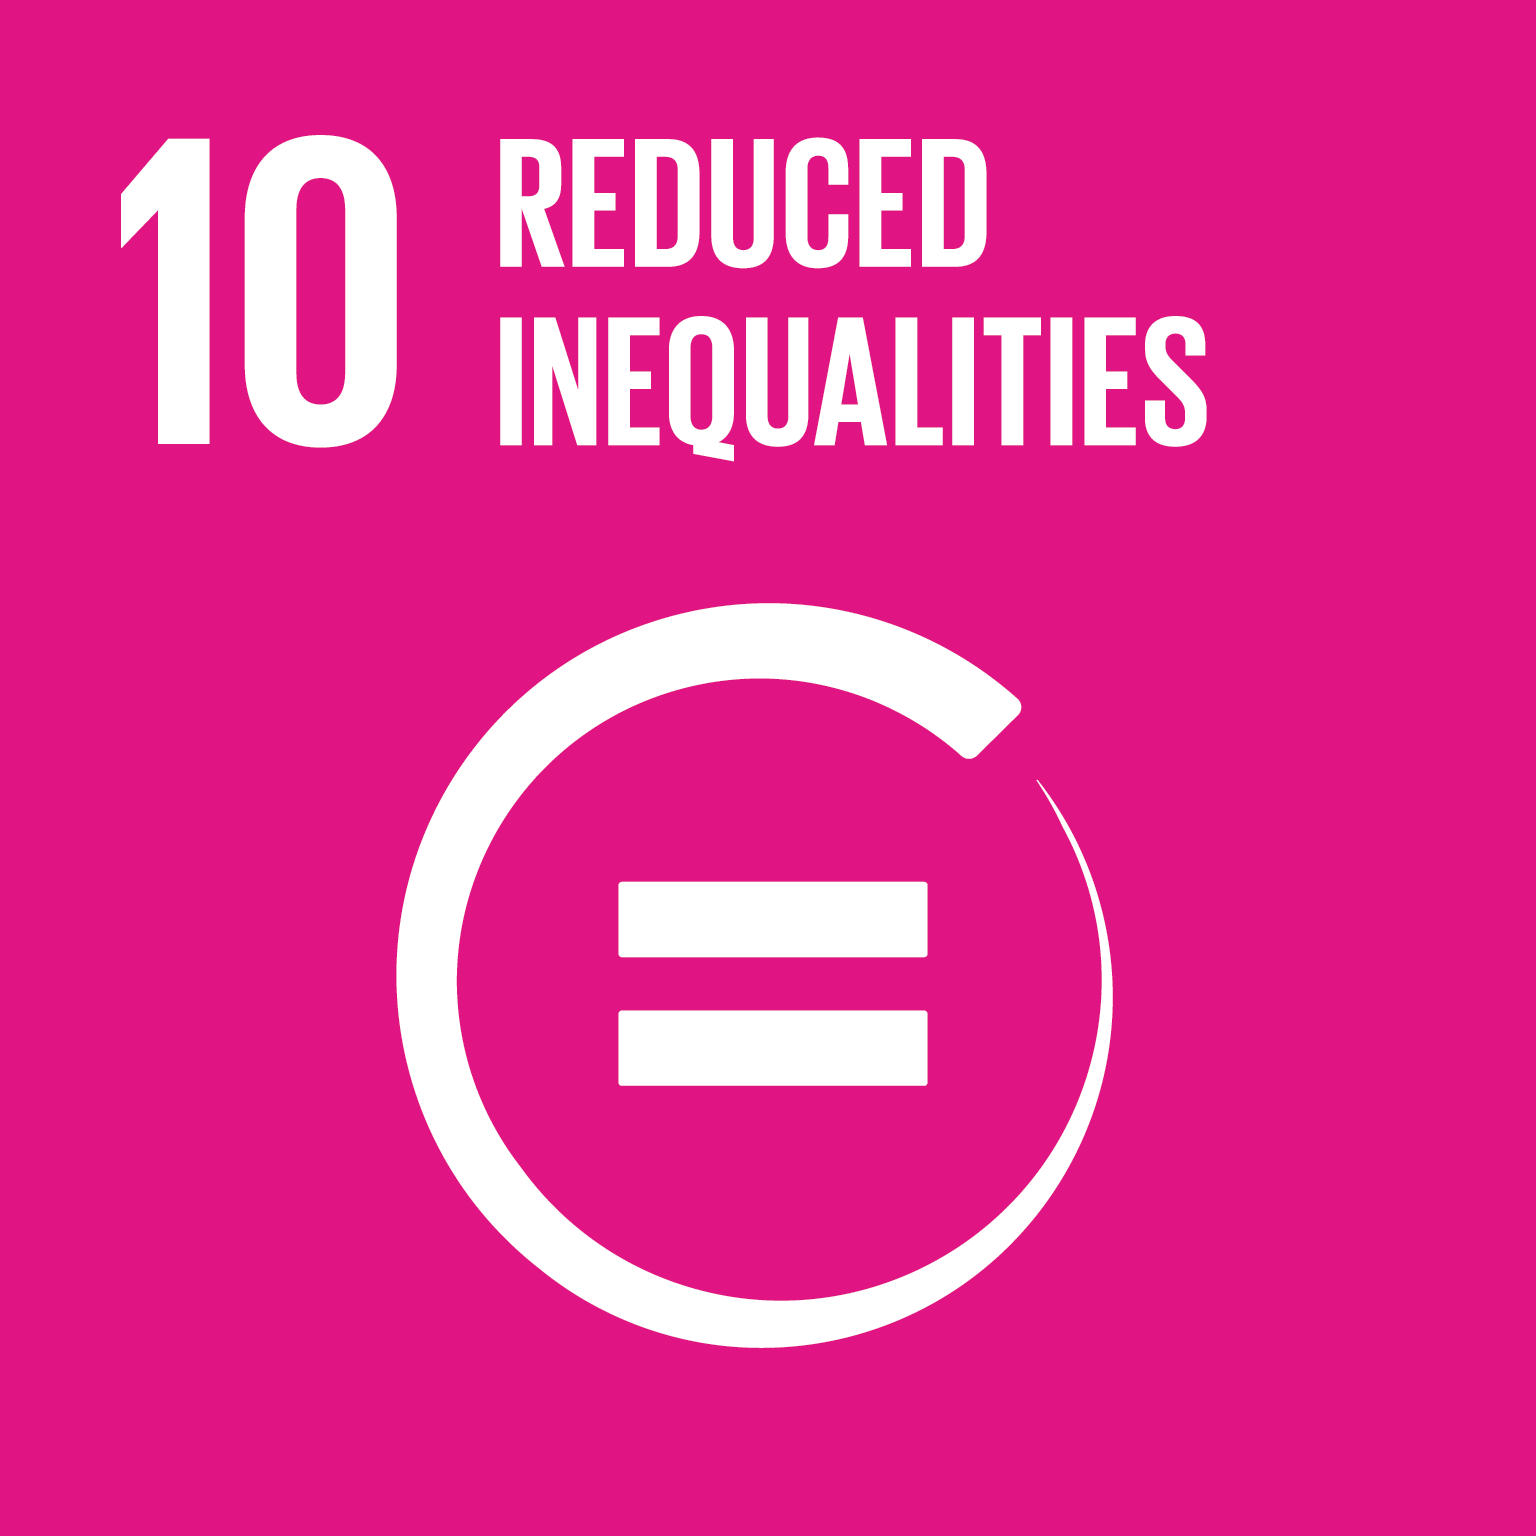 10 - Reduced Inequalities